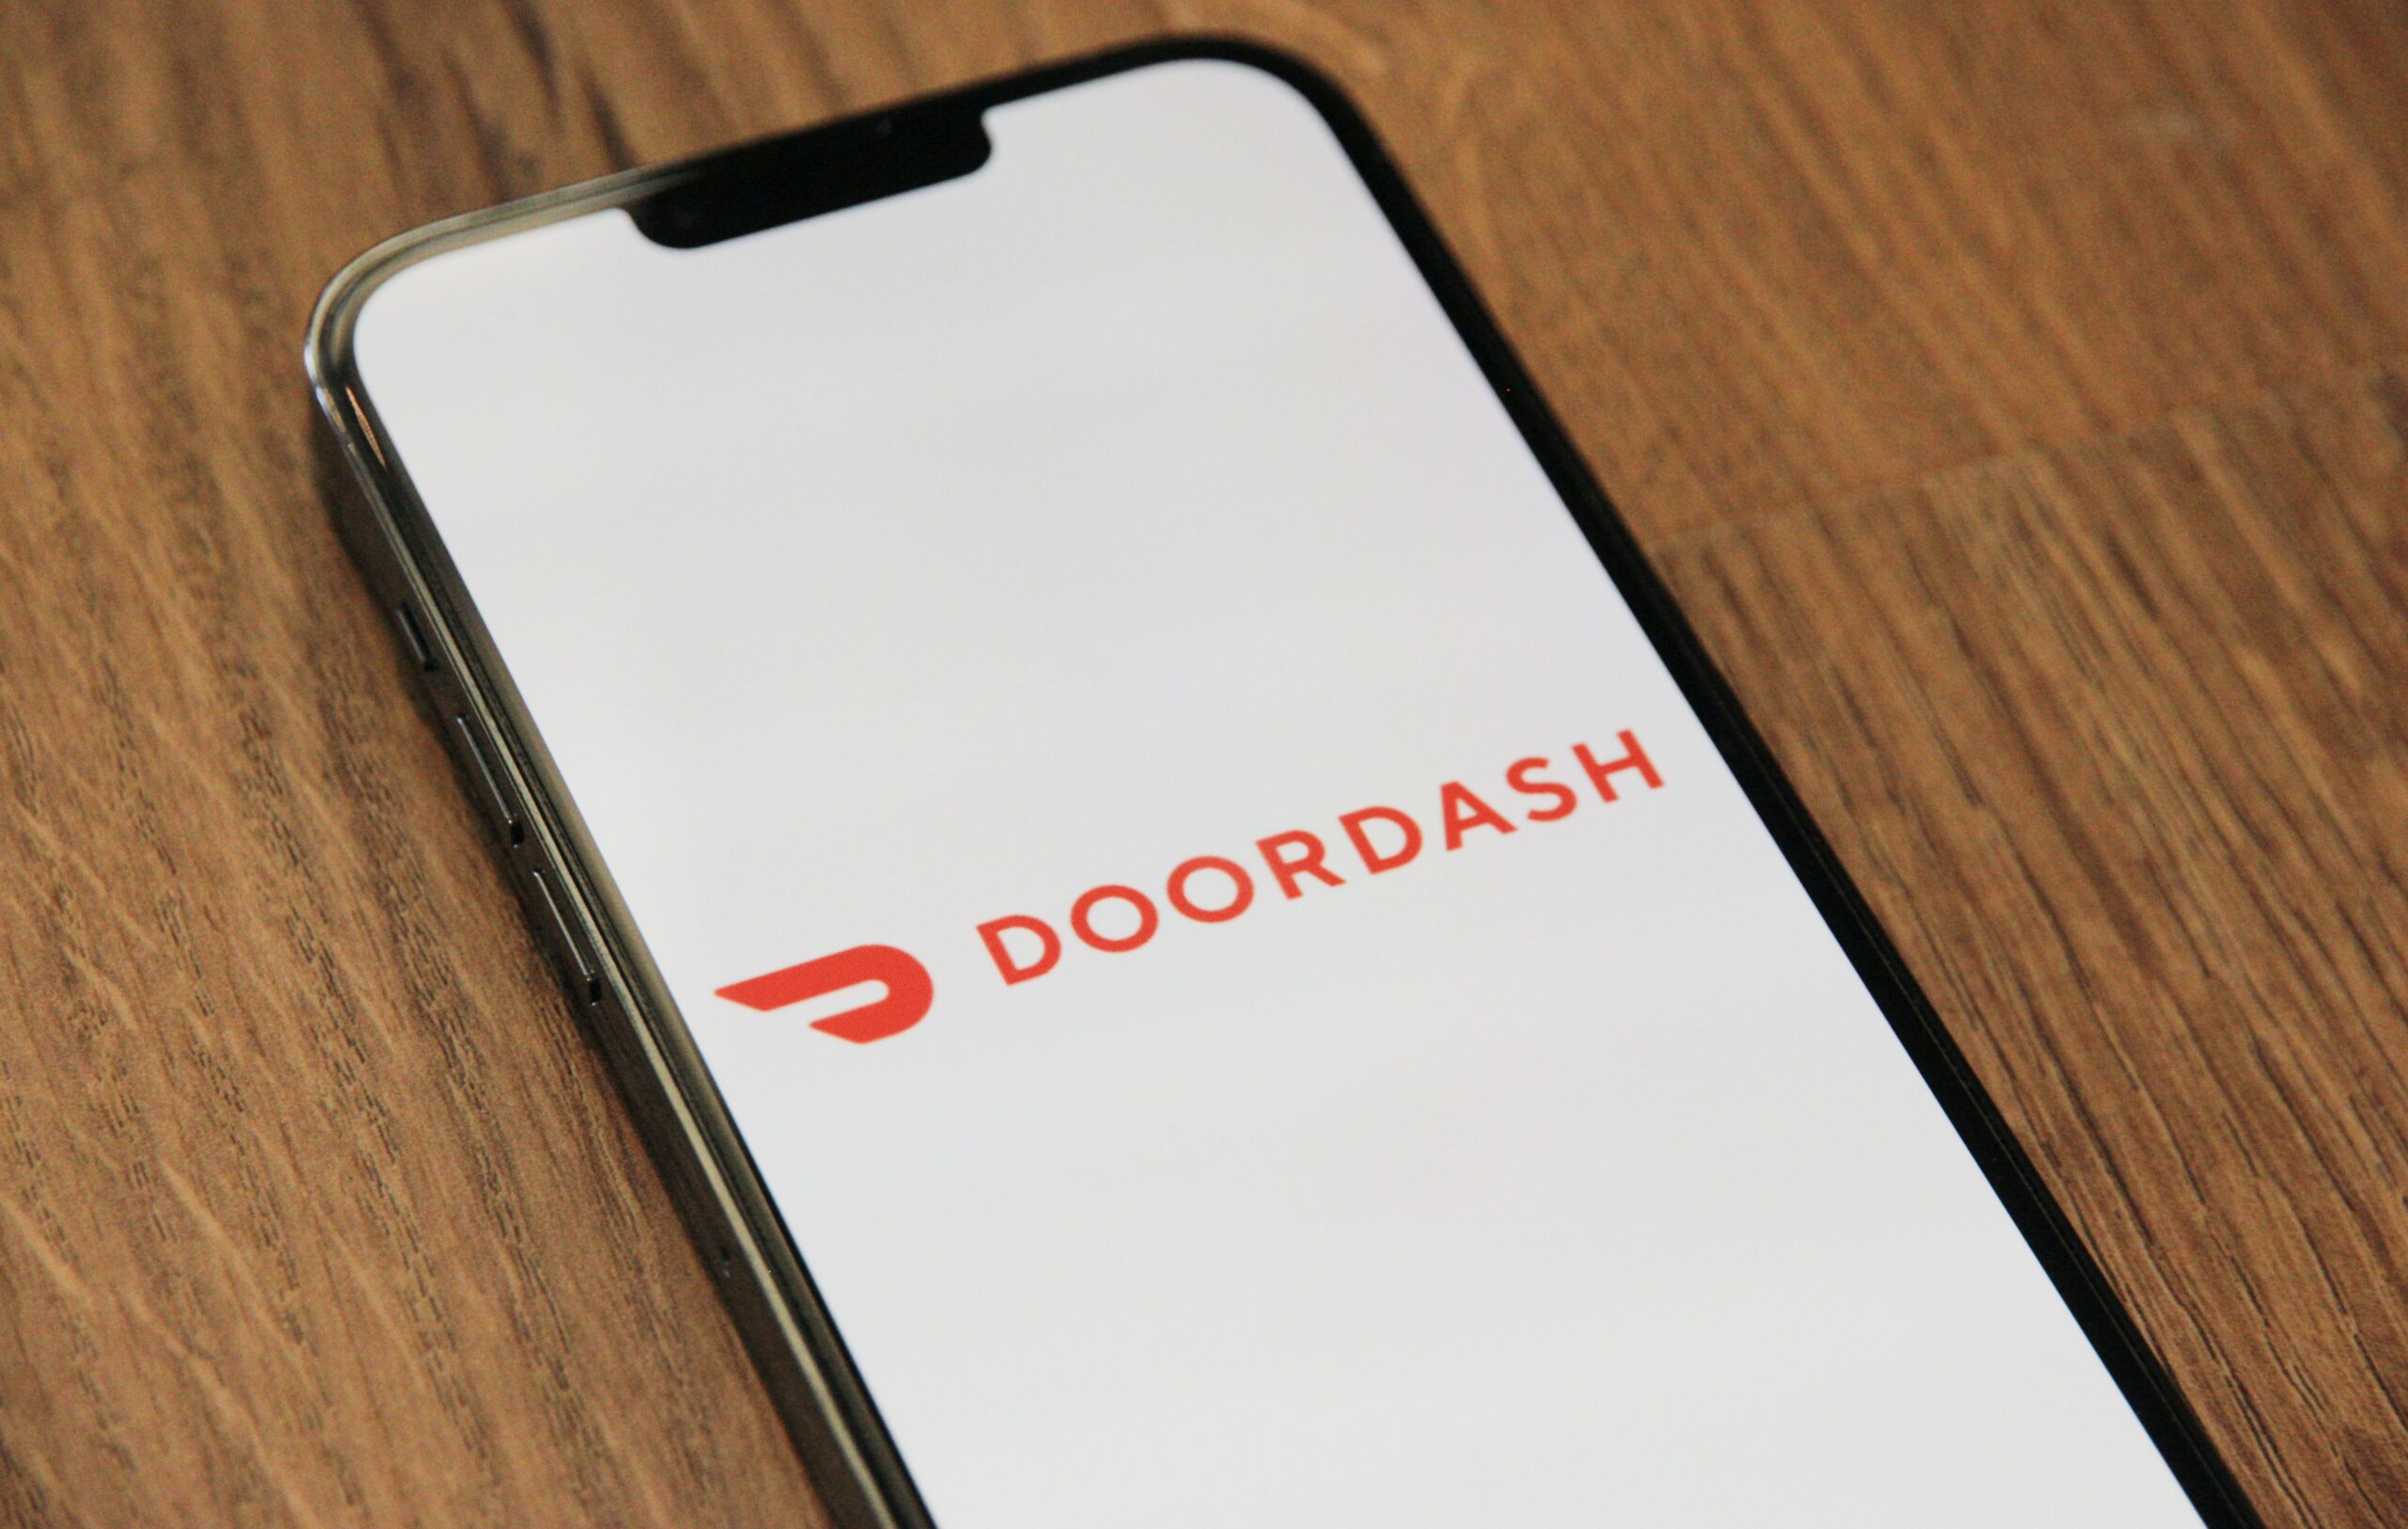 How to use your DoorDash Merchant Login